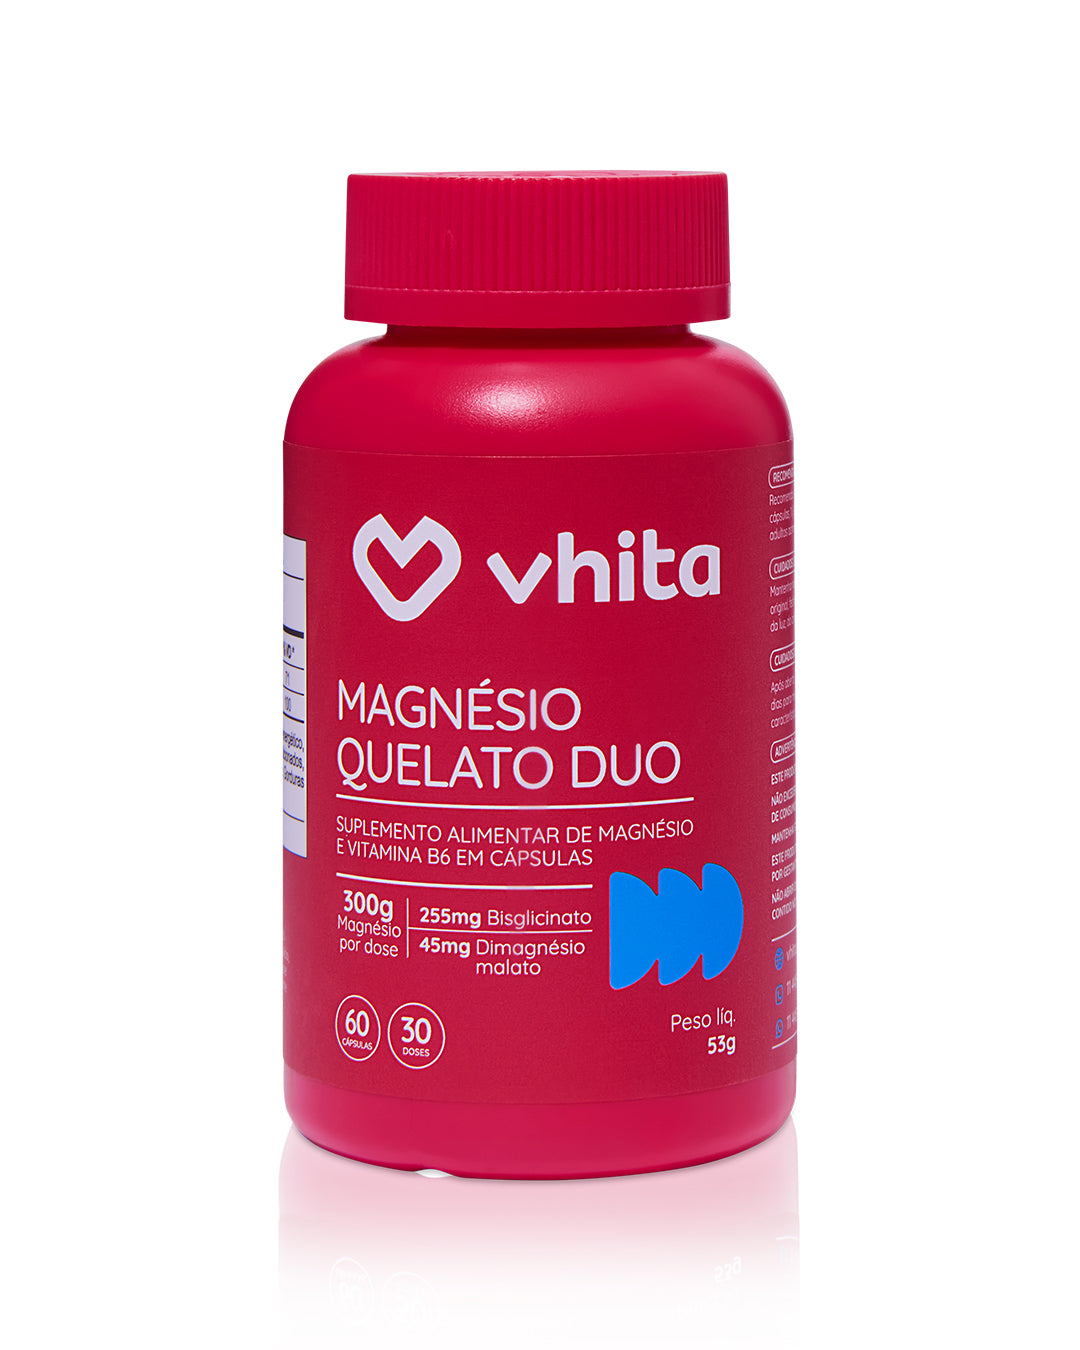 Magnésio Quelato Duo 300mg Dimalato e Bisglicinato com Vitamina B6 em cápsulas